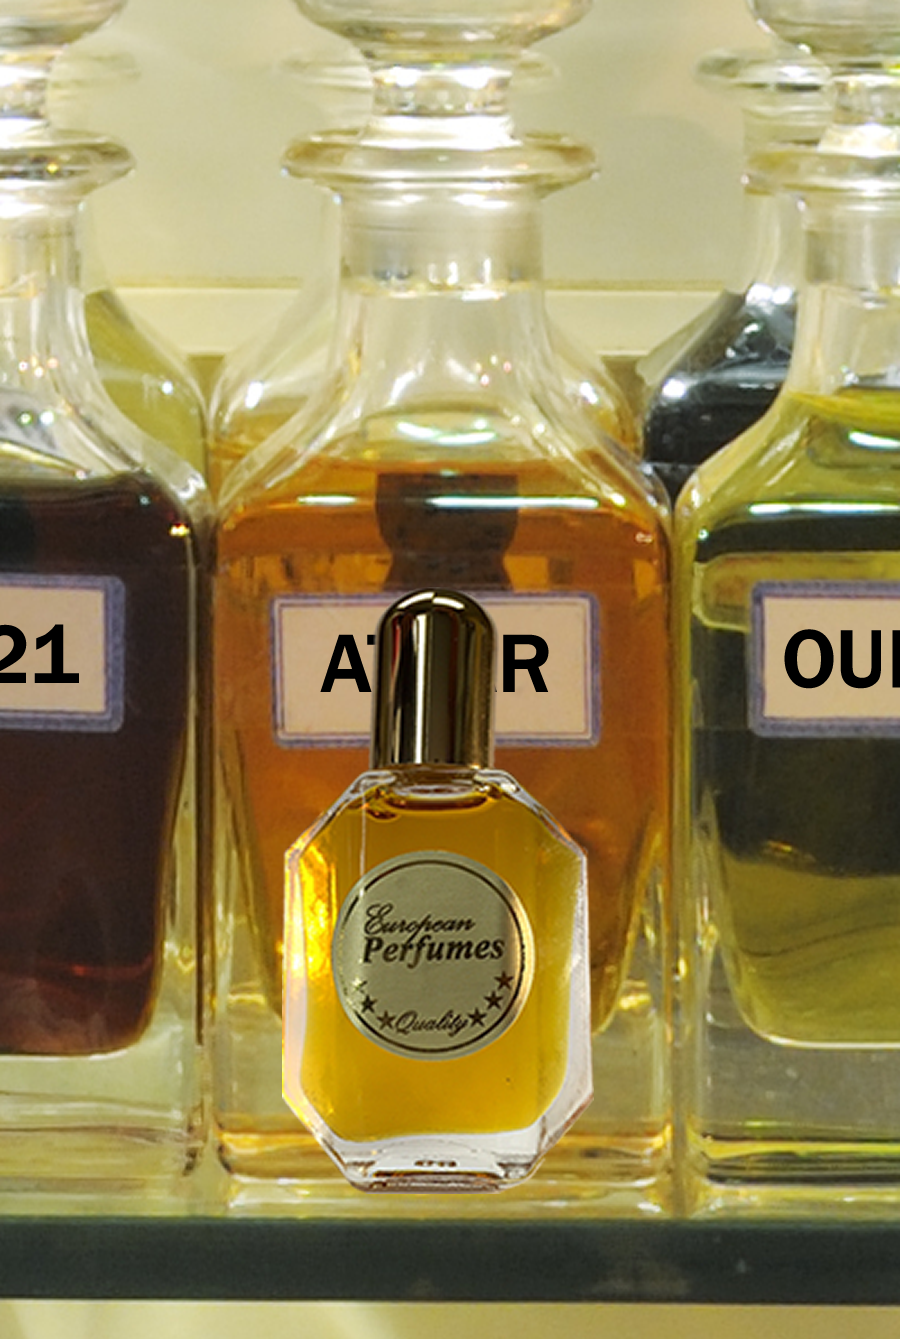 IMPERIAL Type Perfume Oil Men